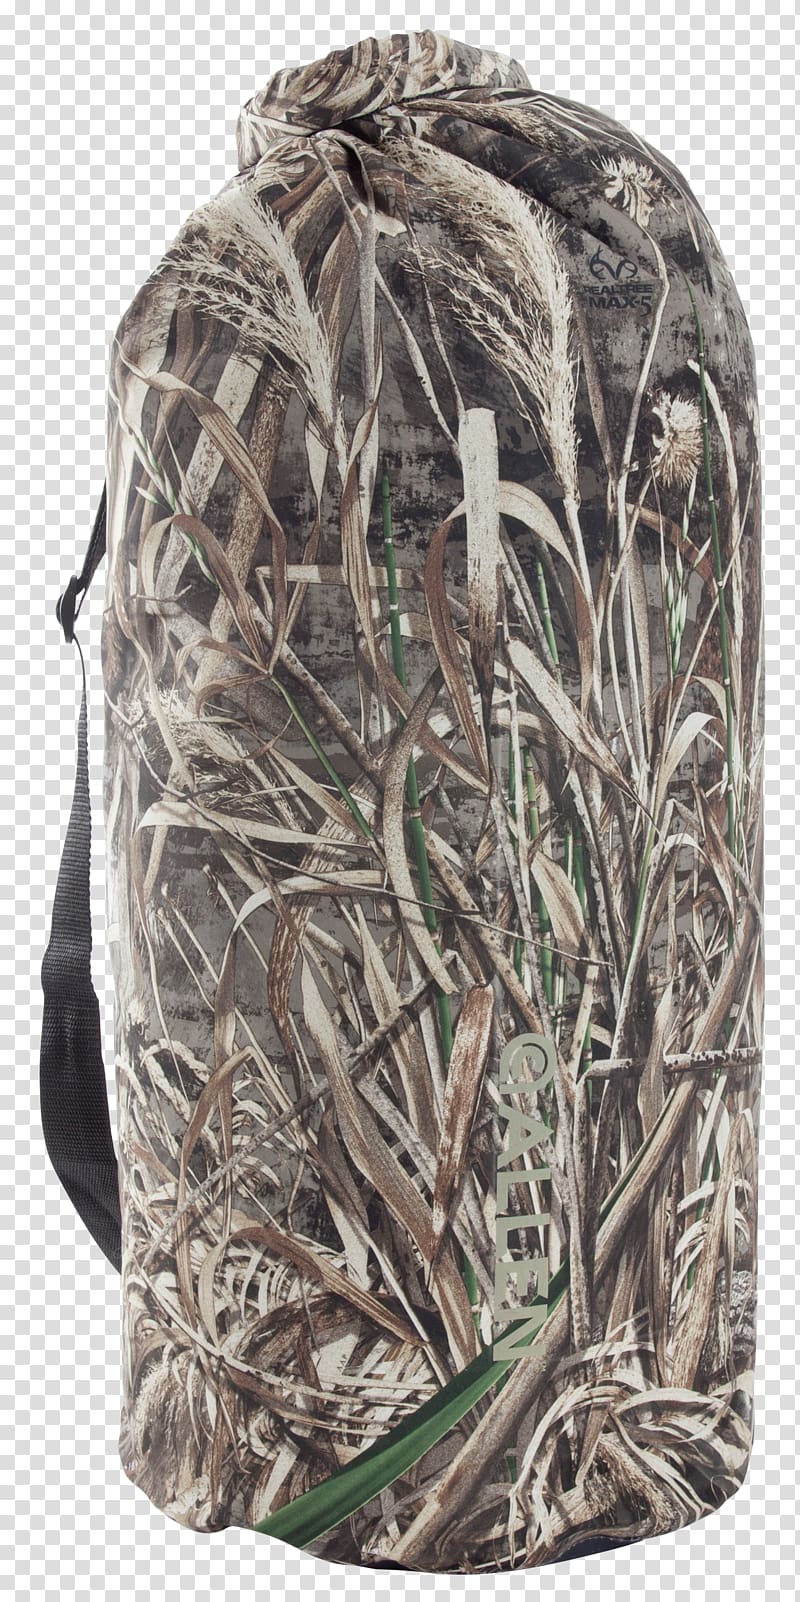 Bag Gunny sack Max Hamburgers Outdoor Recreation Hunting, bag transparent background PNG clipart